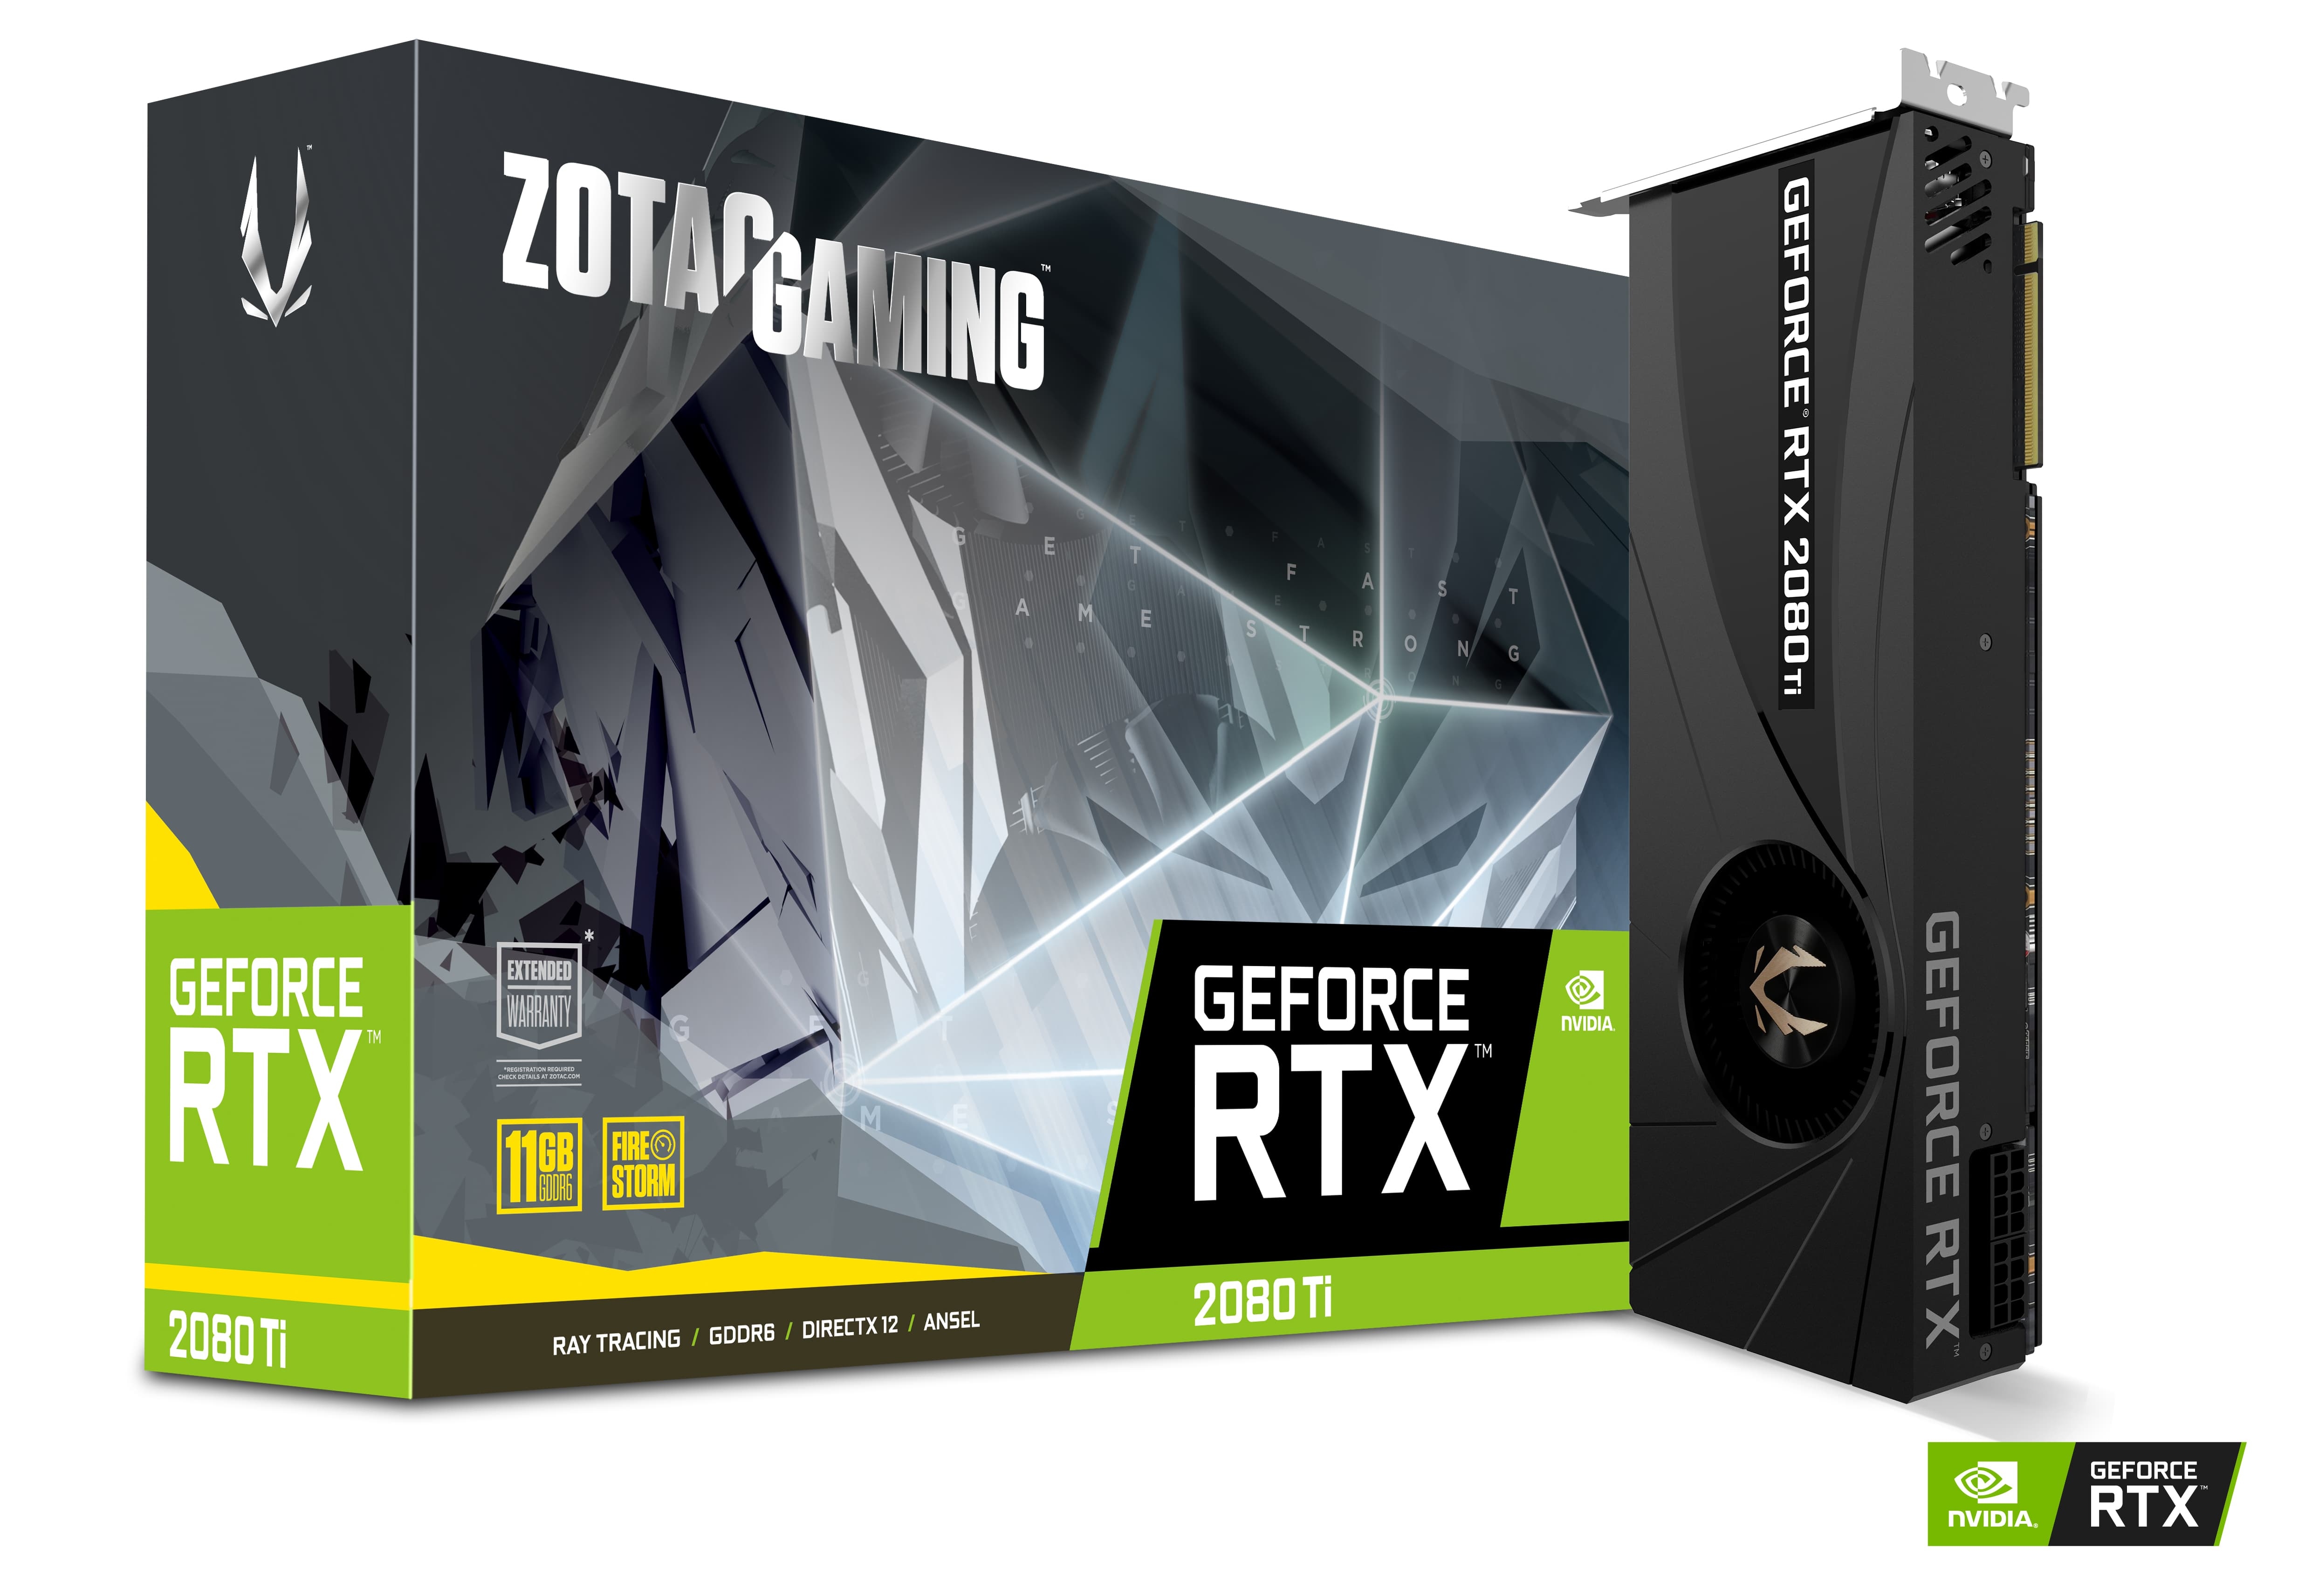 ZOTAC GeForce RTX 2080 Ti | ZOTAC